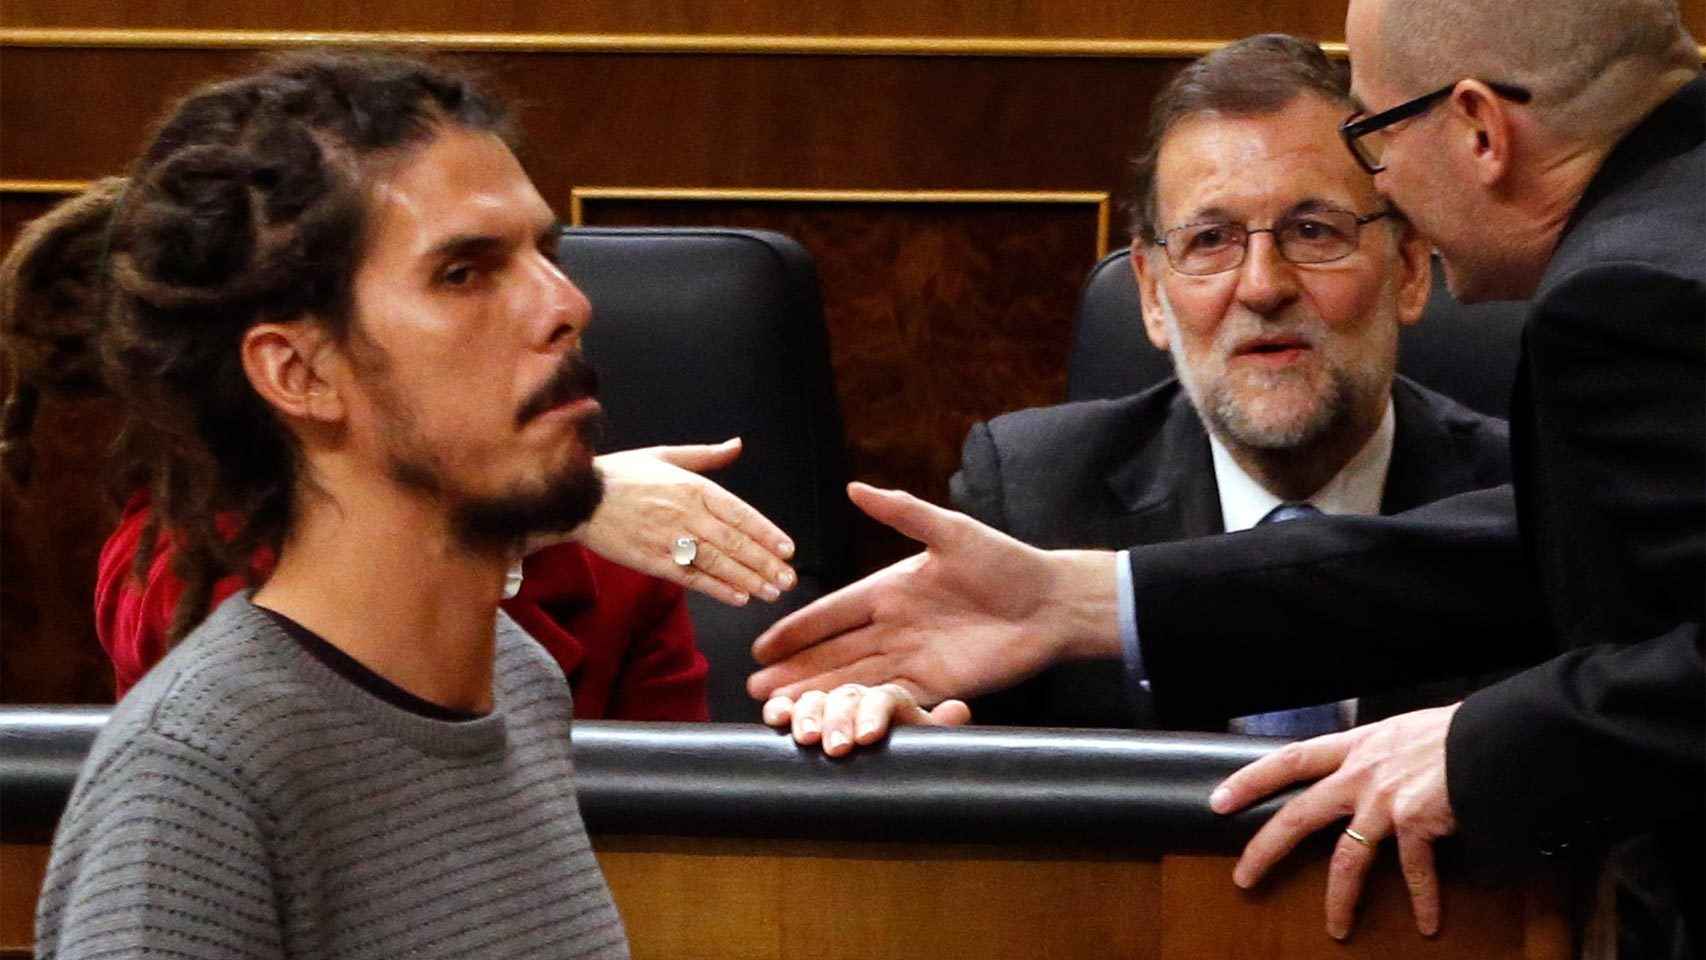 El diputado de Podemos Alberto Rodríguez pasa frente a Rajoy.